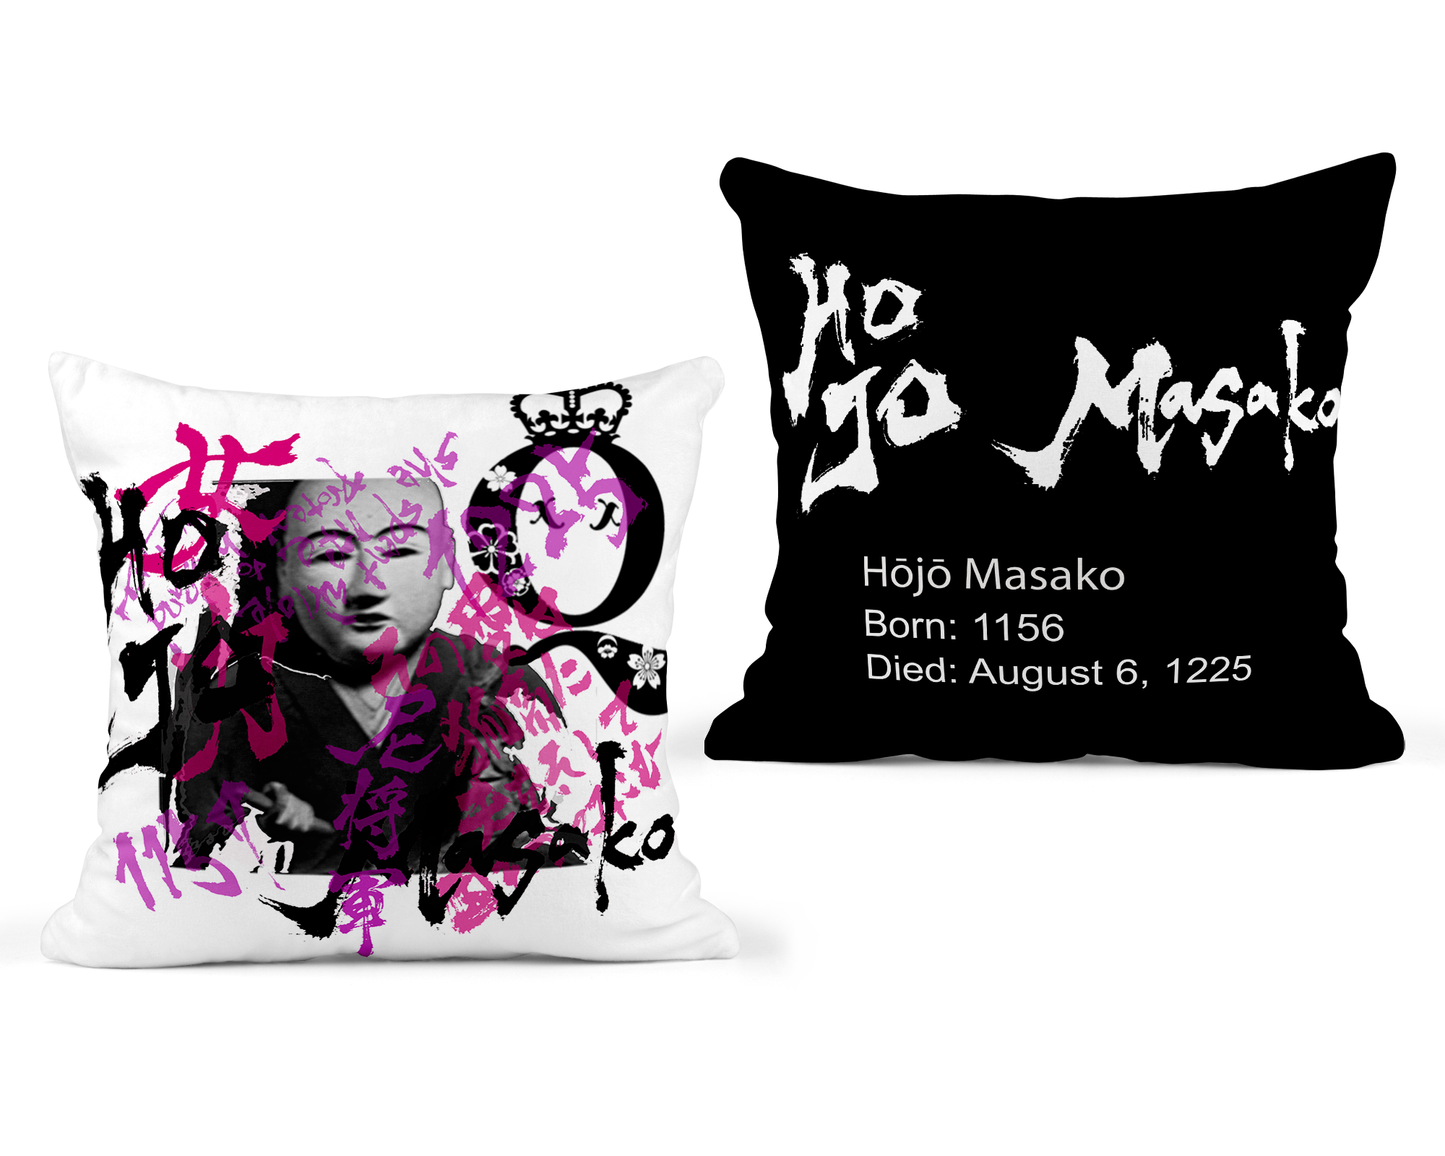 Hojo Masako Throw Pillow 22x22 - Black Back